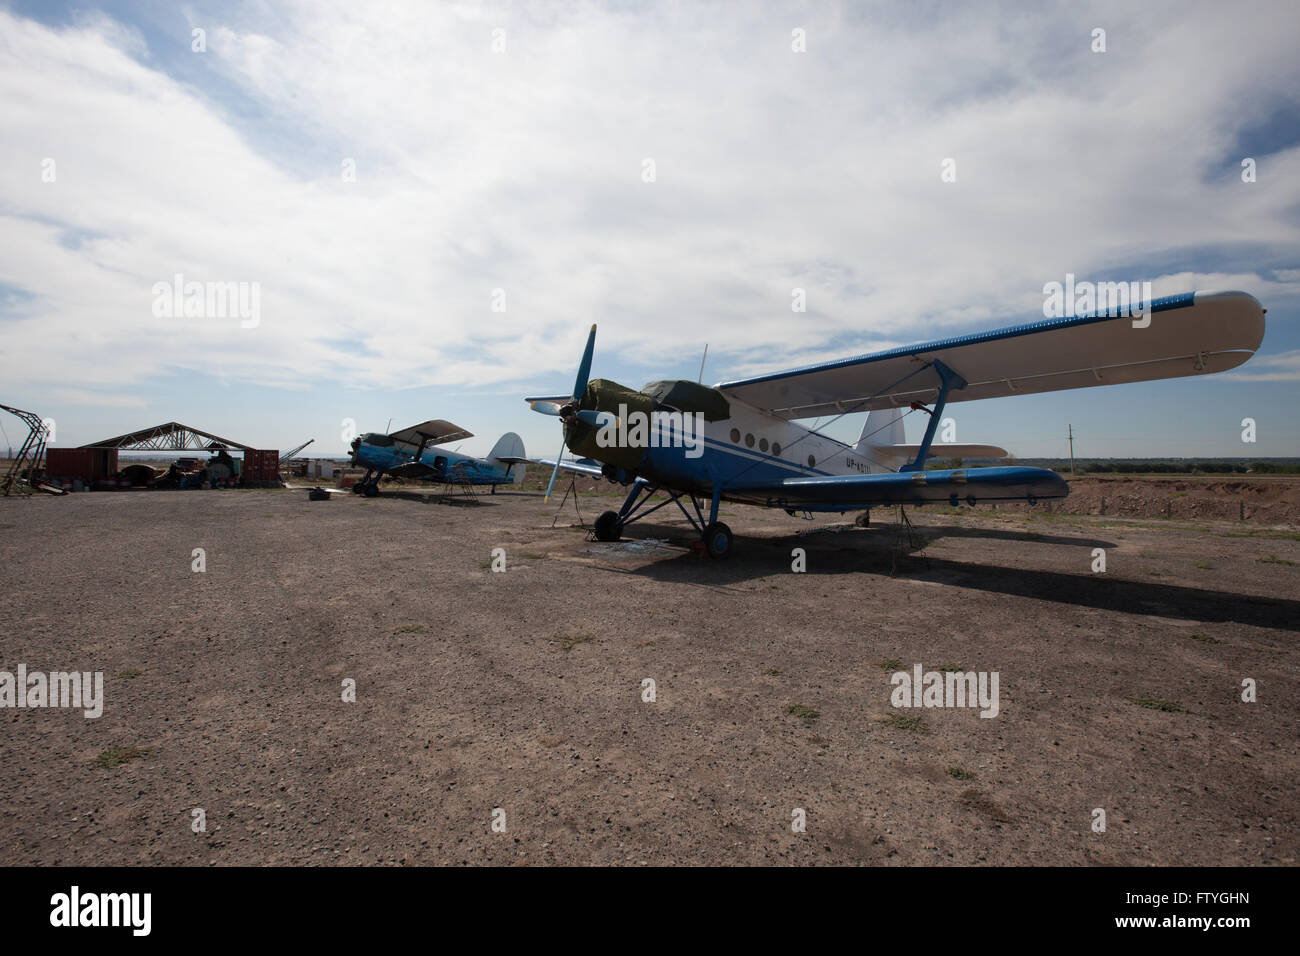 Kazakhstan, Kazakistan, Asia, landed agriculture airplanes near to the hangar. Stock Photo